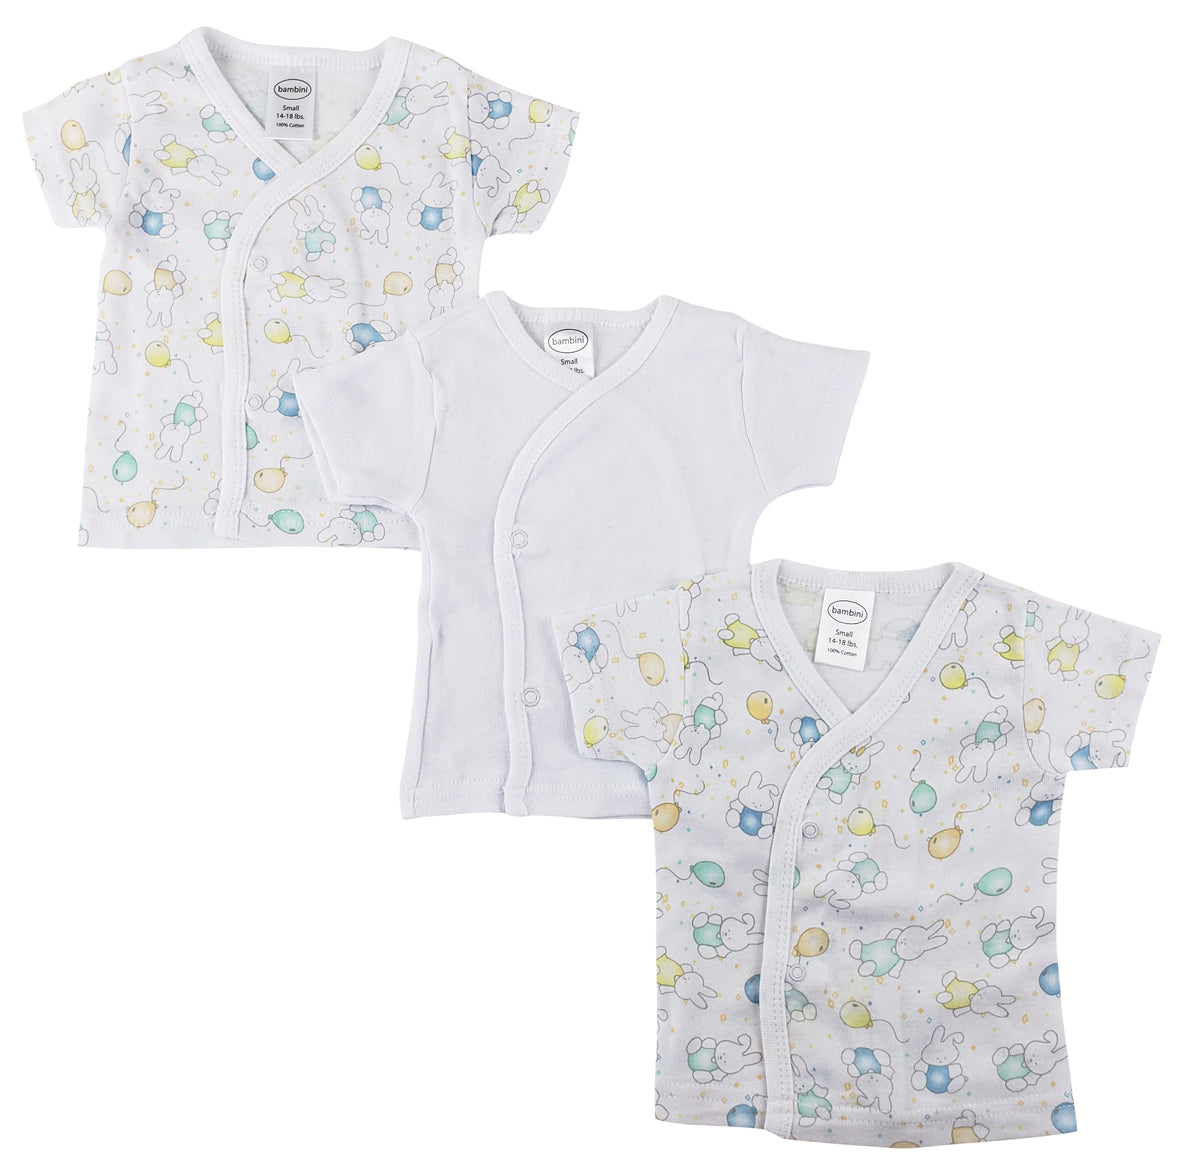 Infant Side Snap Short Sleeve Shirt - 3 Pack NC_0201